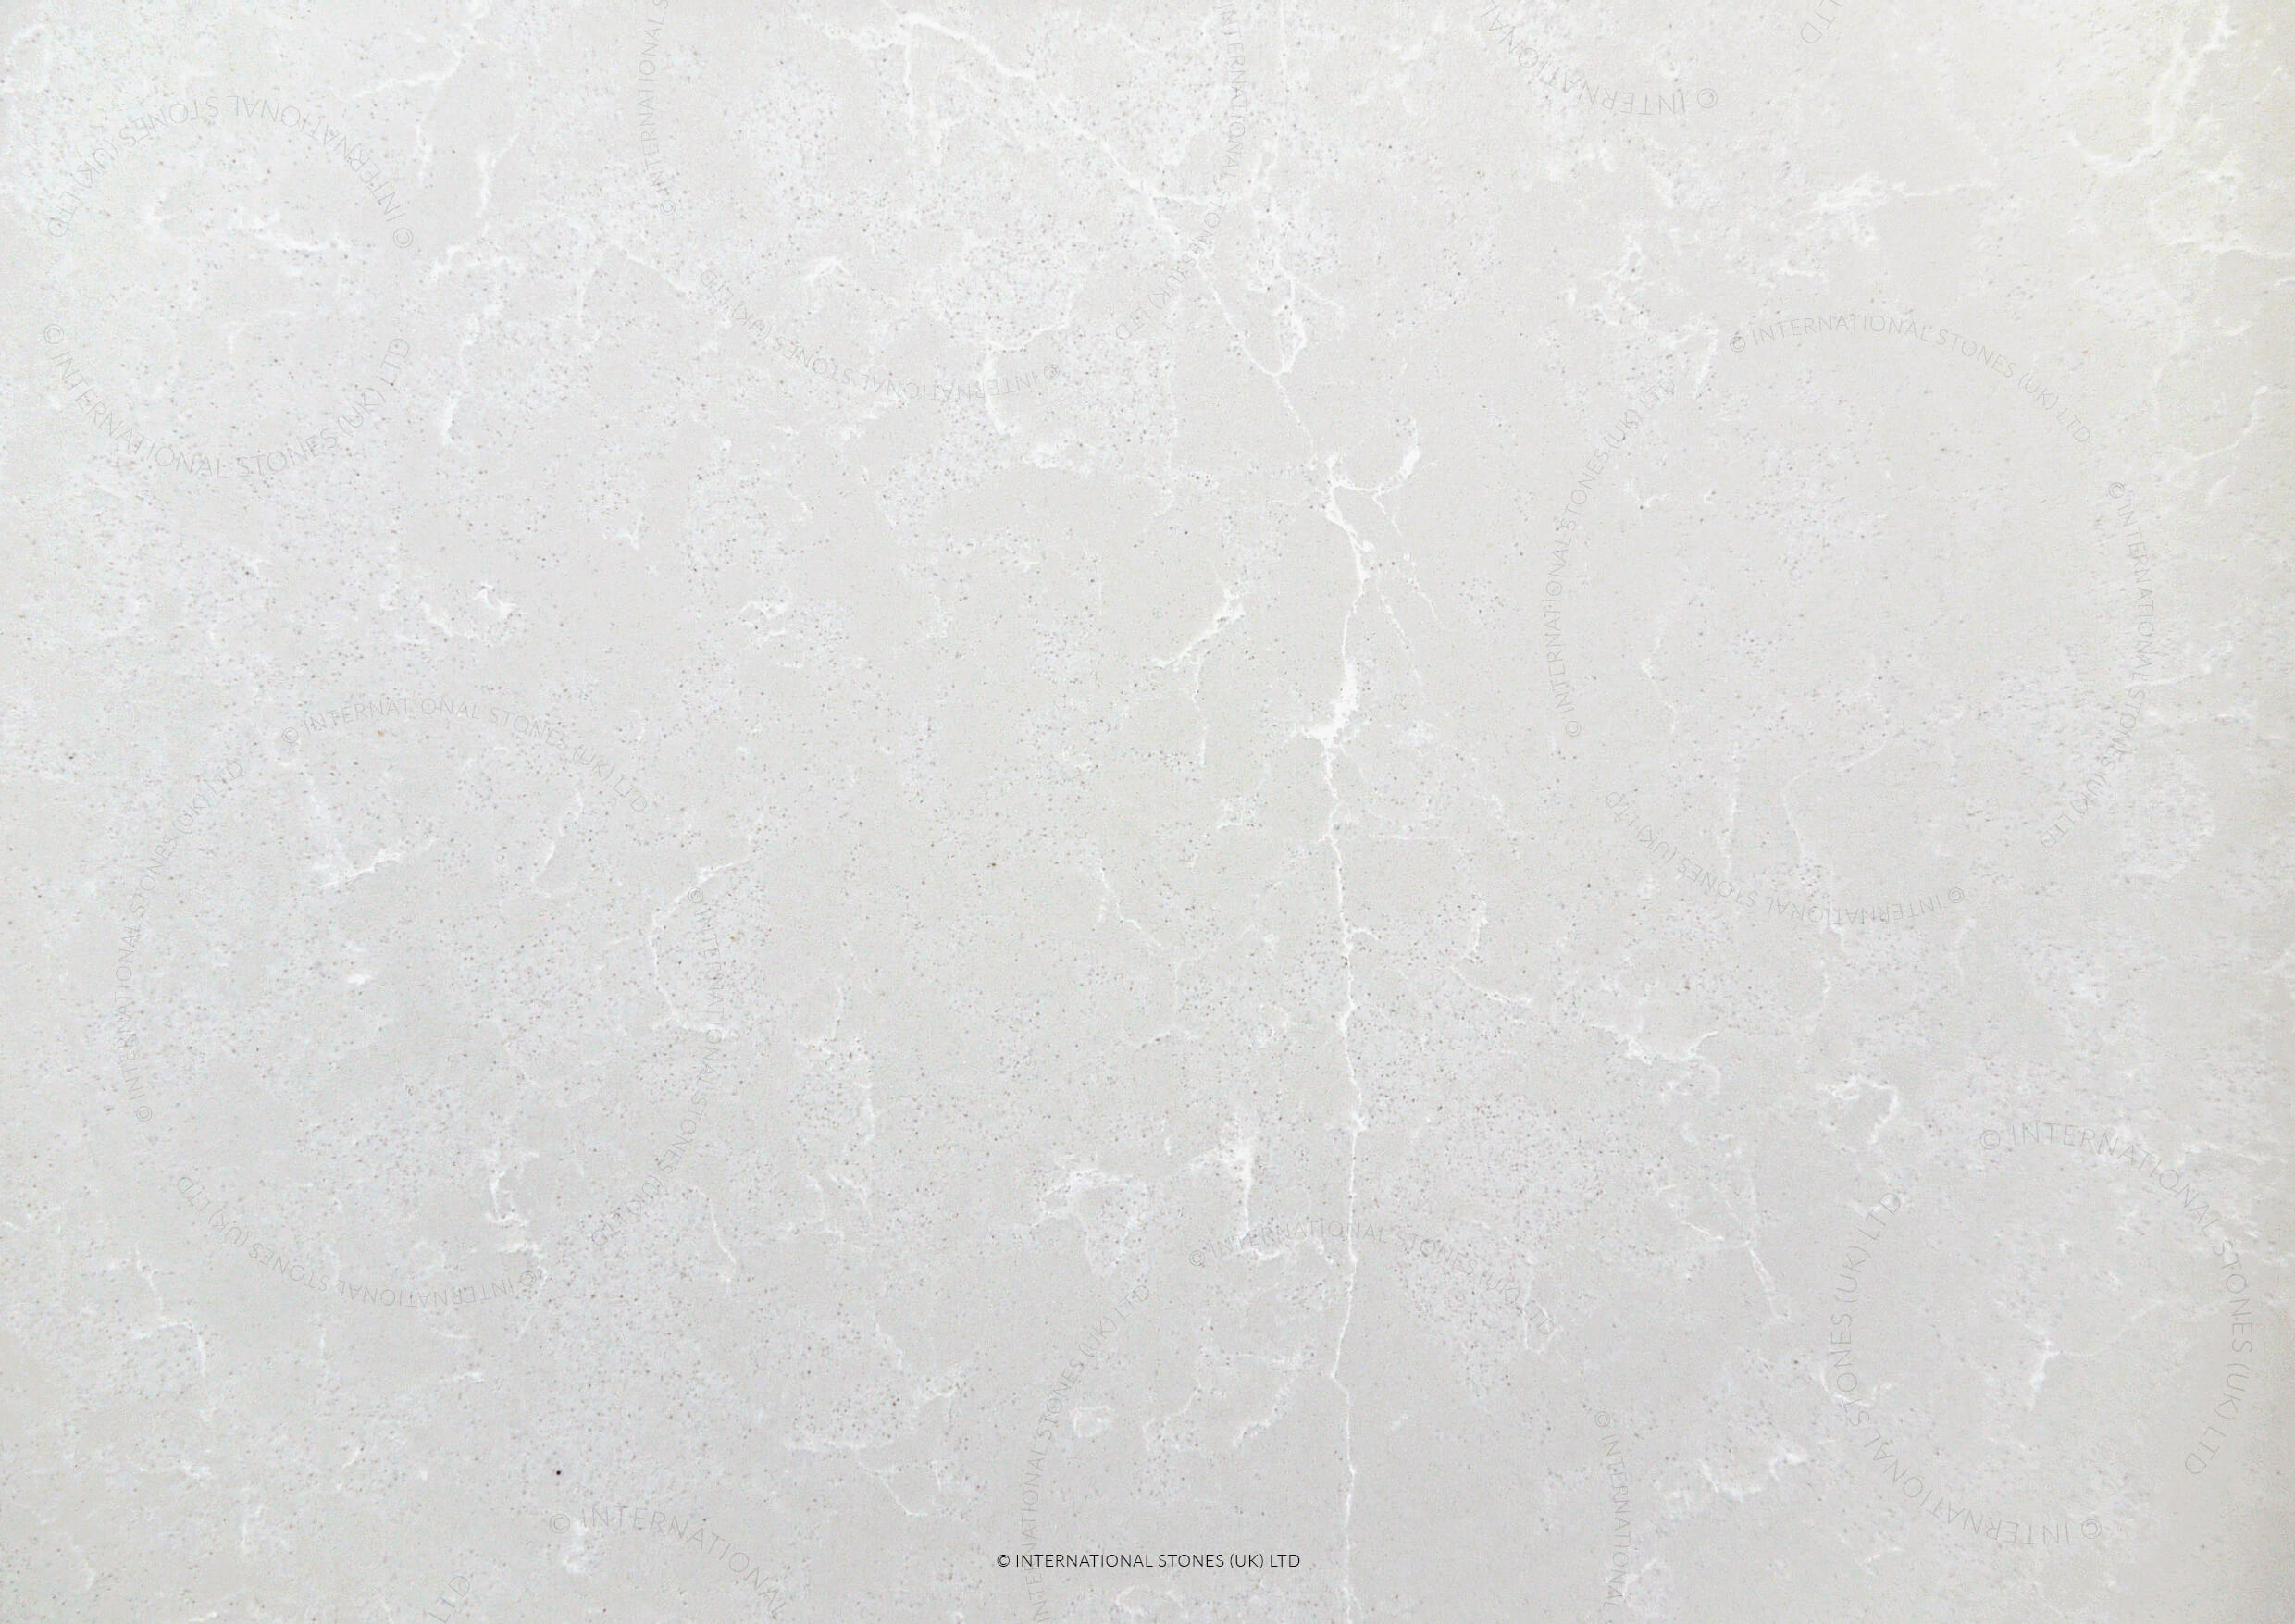 International Stone IQ Desert Silver - suffolk - Felixtowe